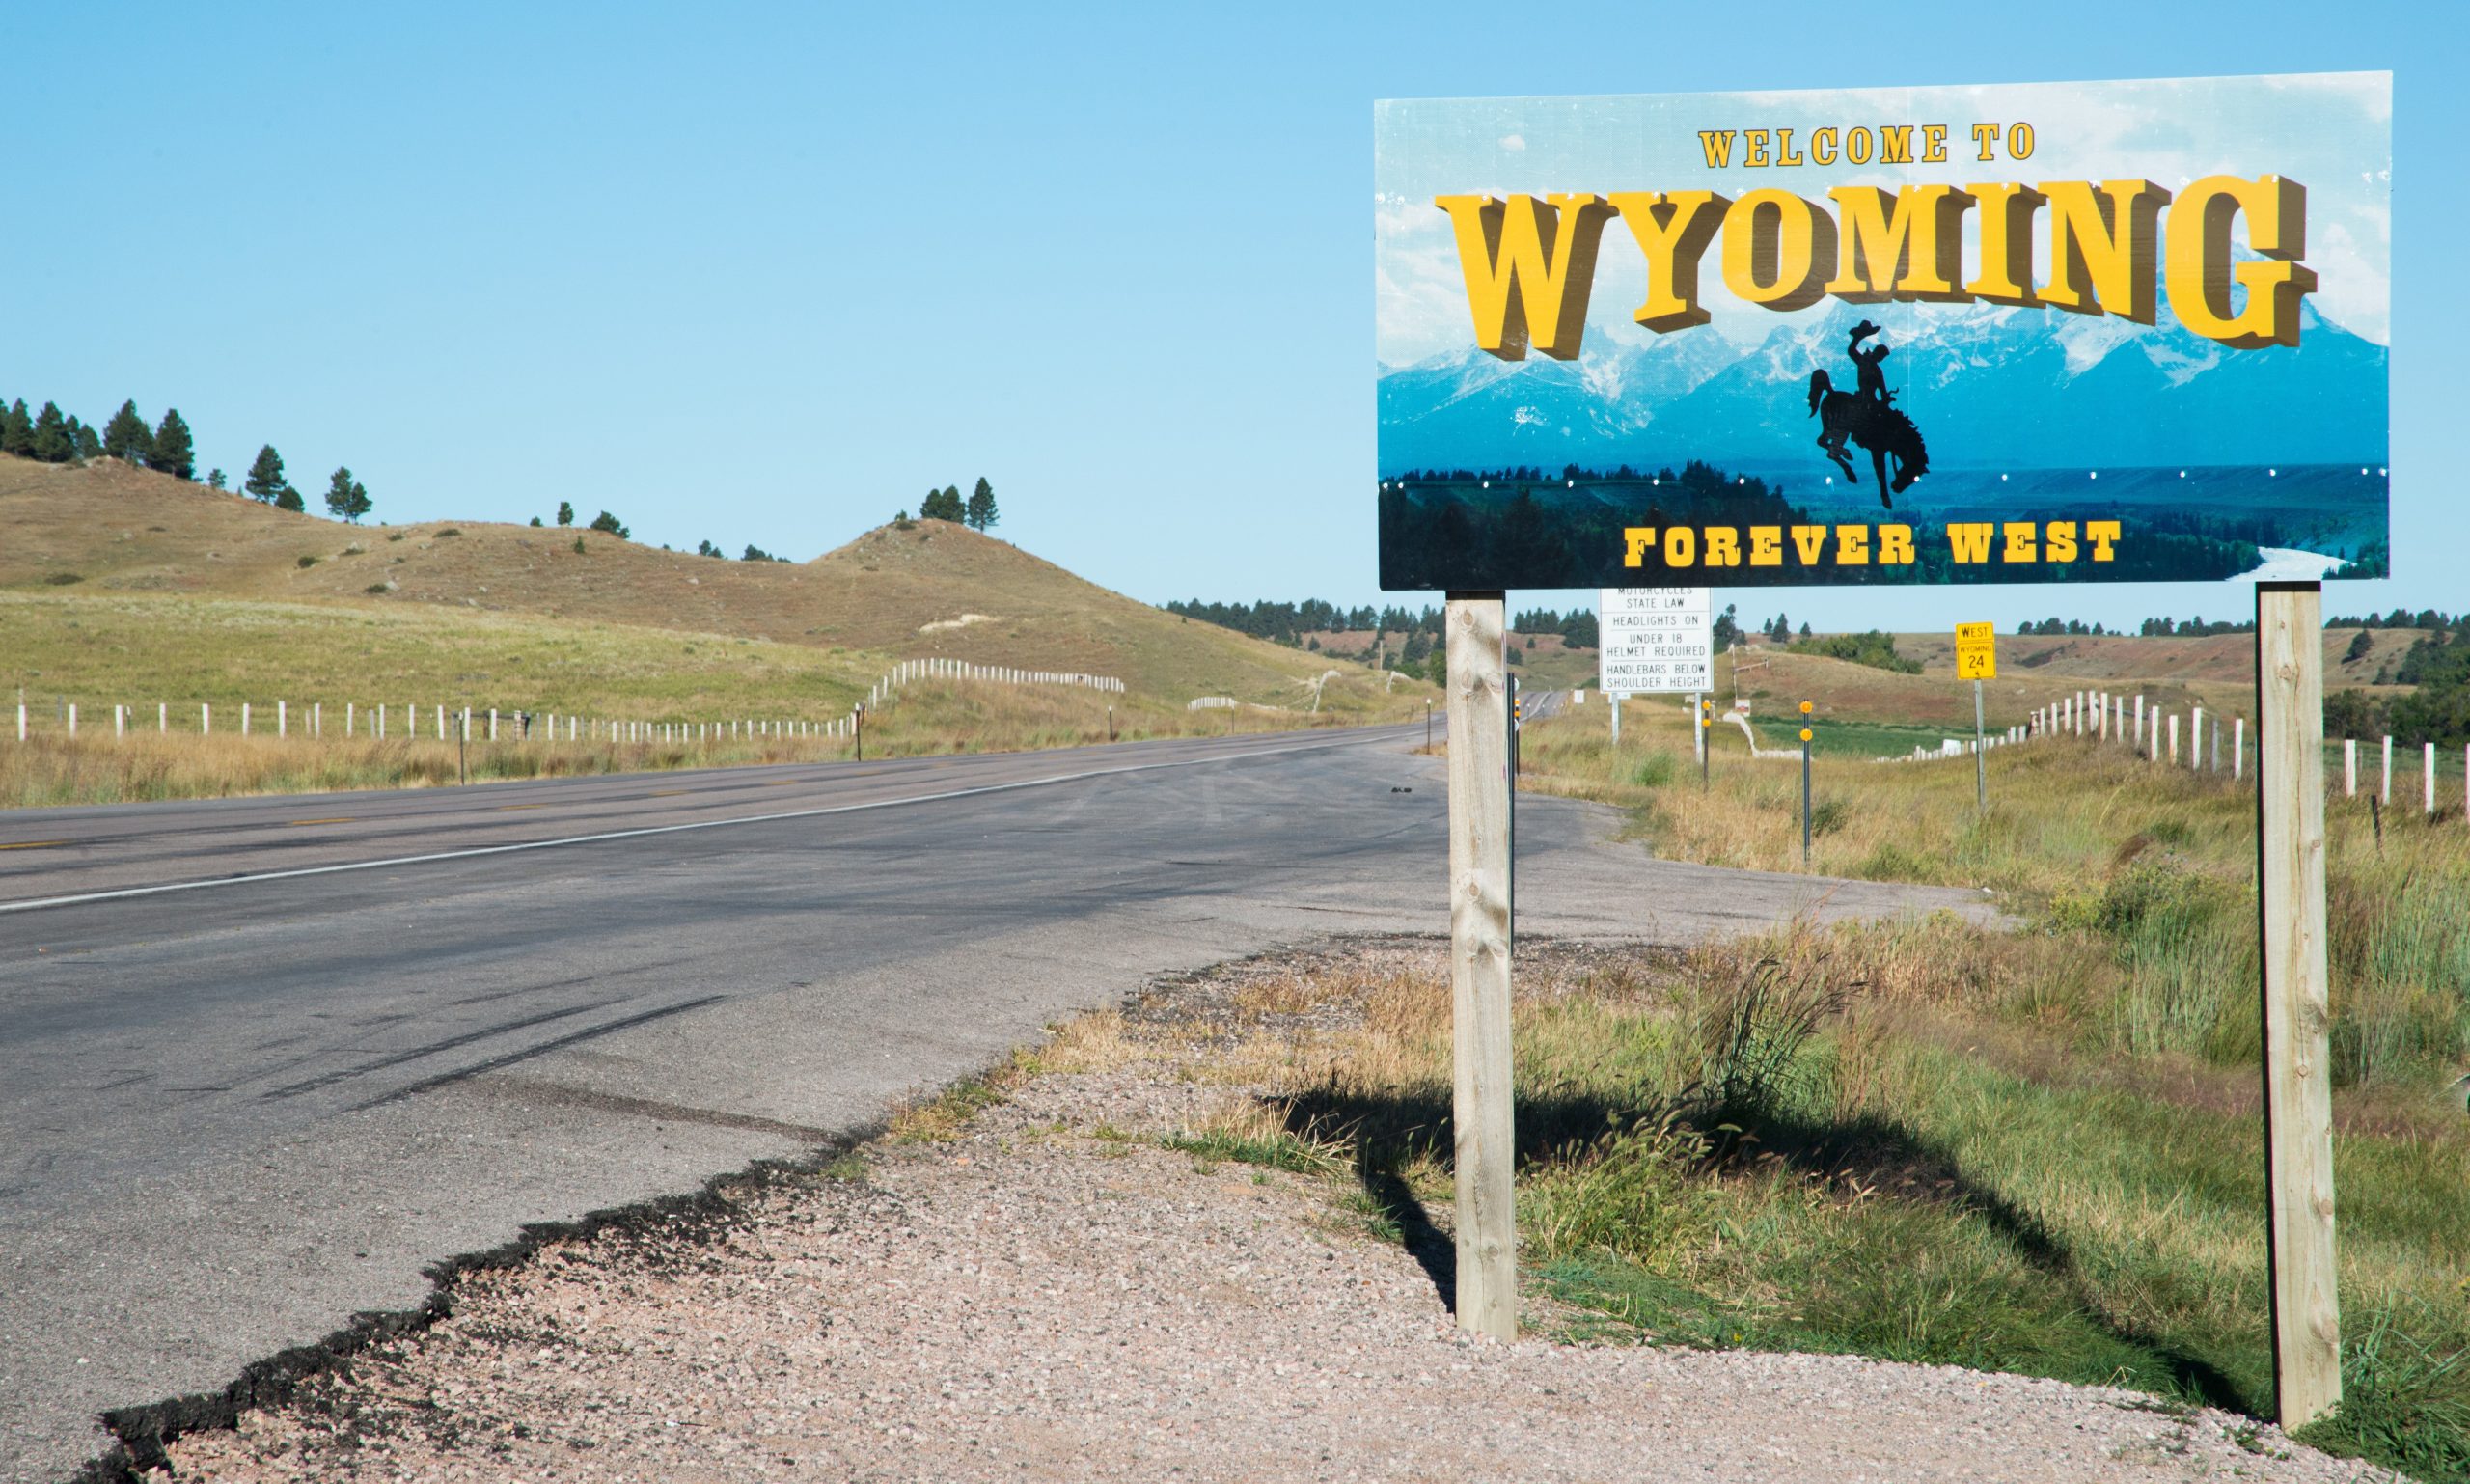 DOE Entrusts University of Wyoming to Lead Hydrogen Project